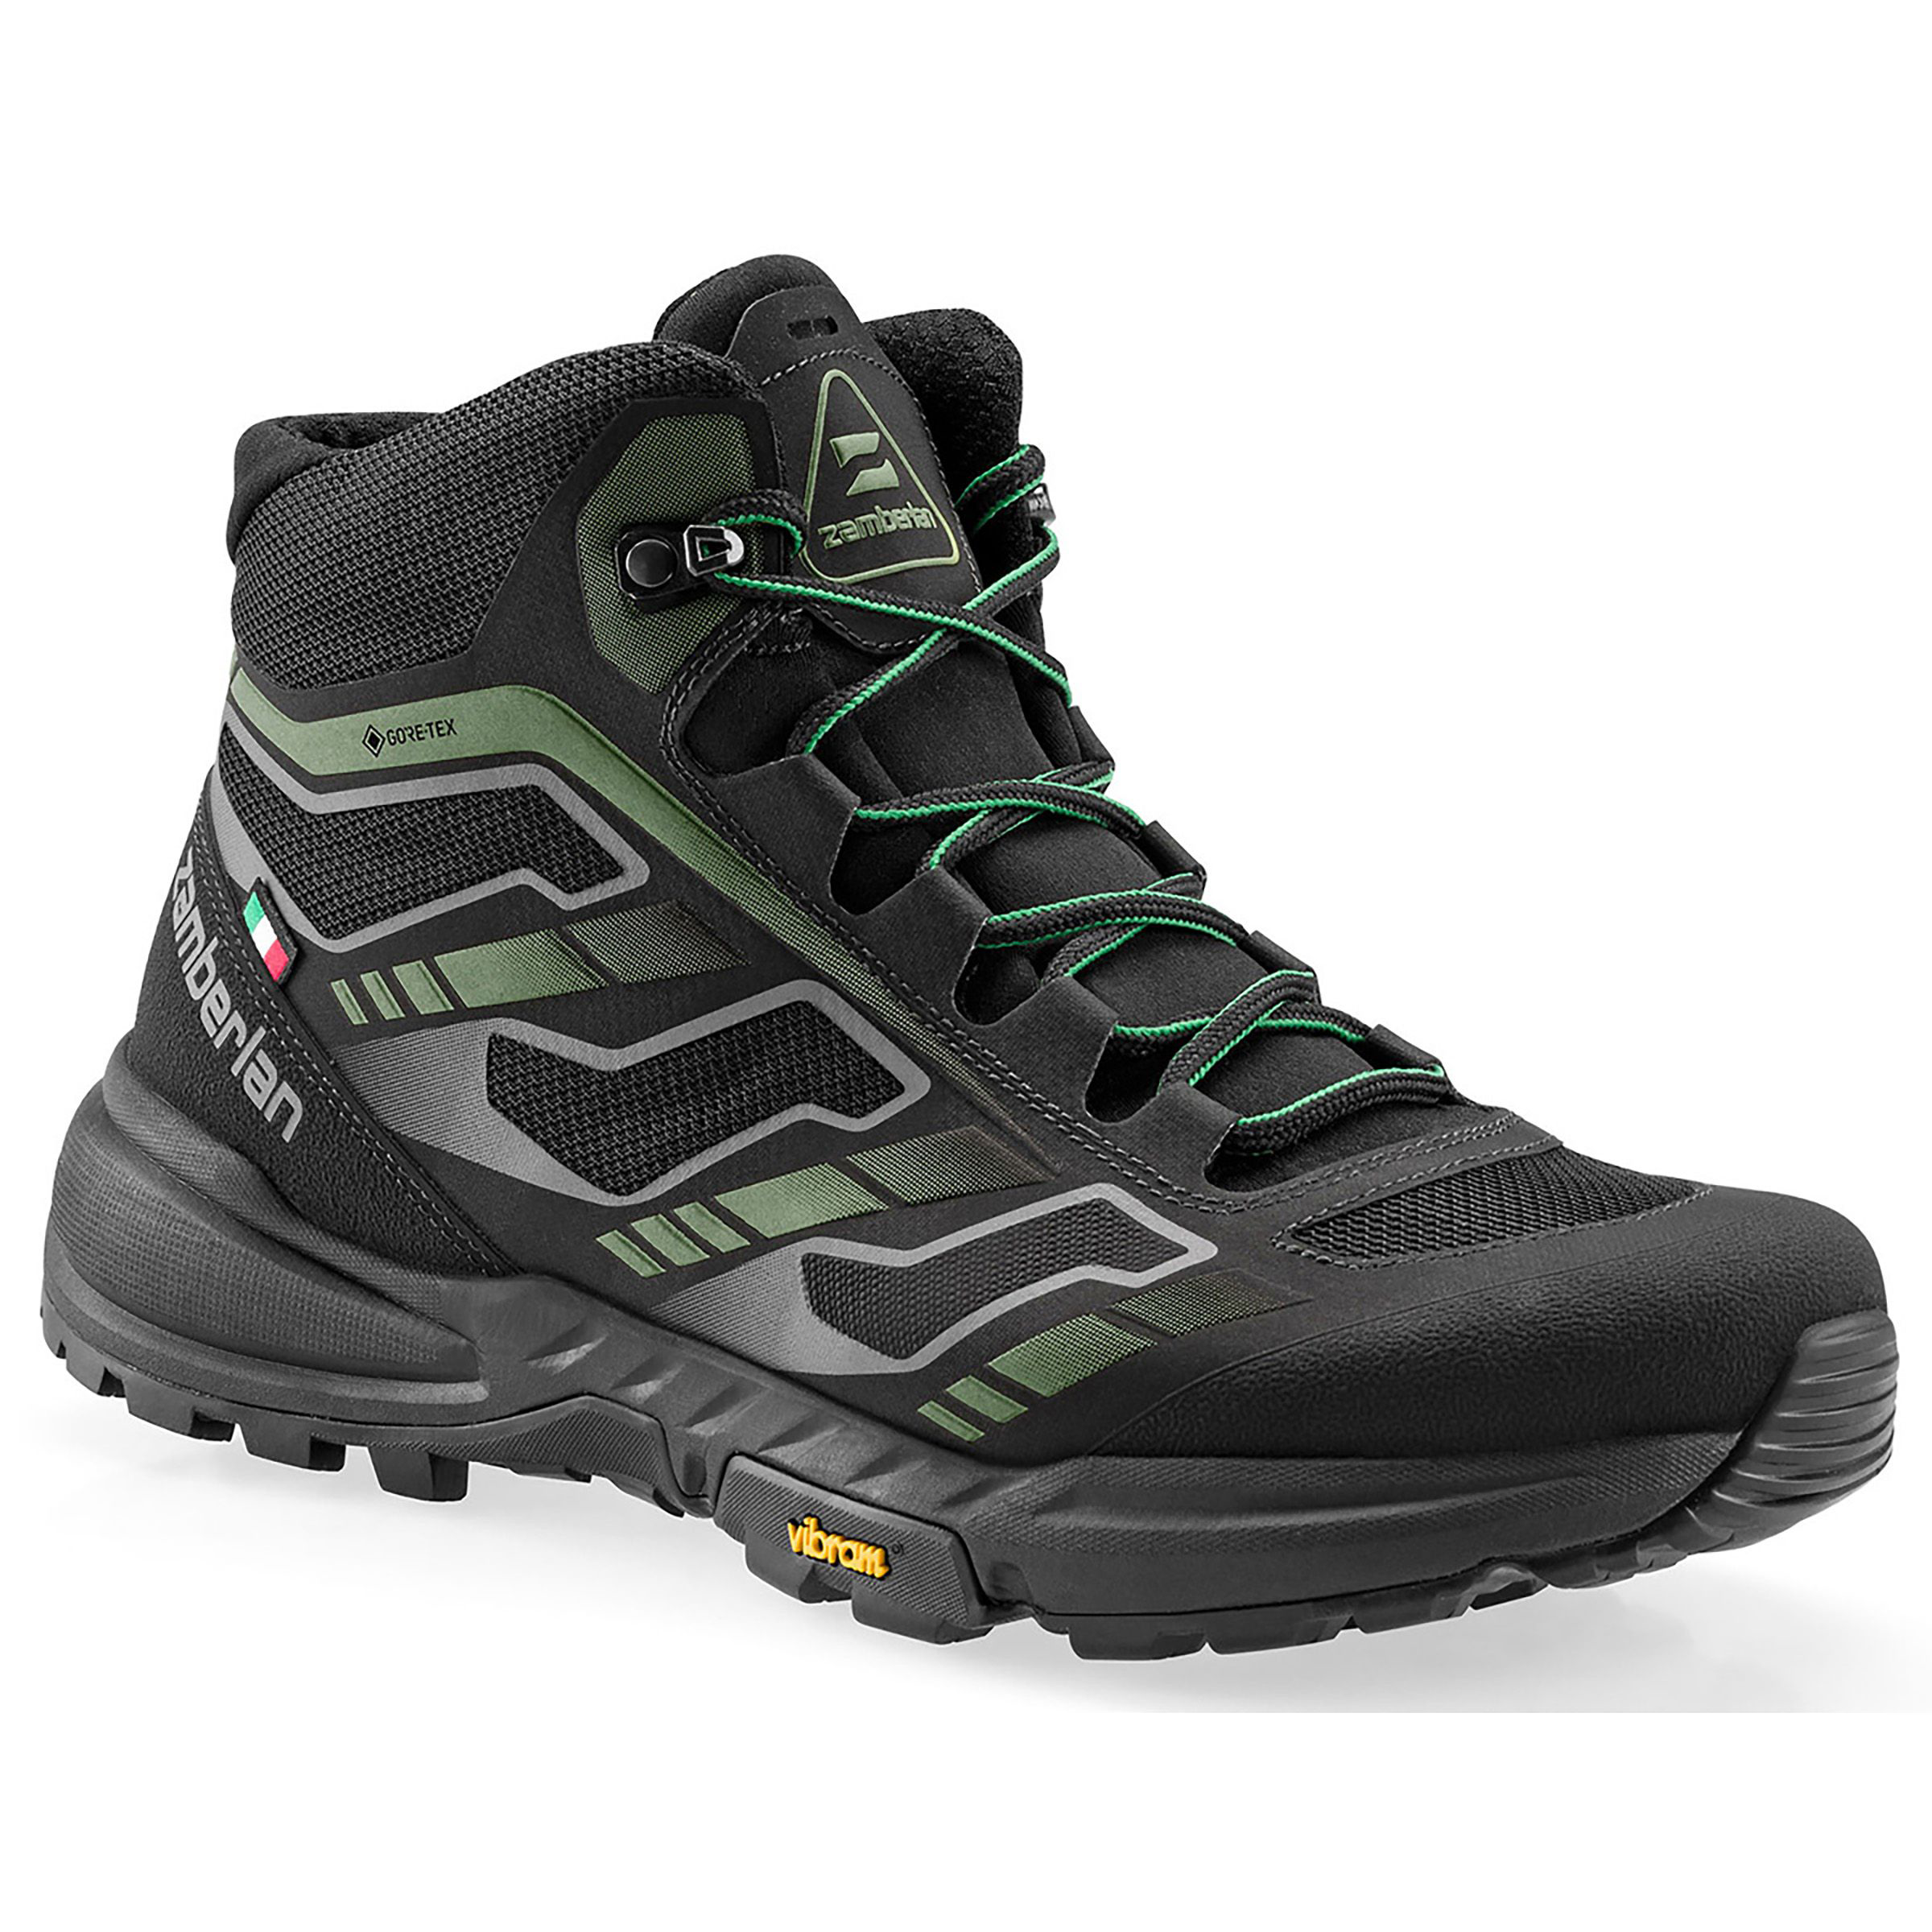 Zamberlan 219 Anabasis GTX Waterproof Mid Hiking Boots for Men - Dark Green - 13M